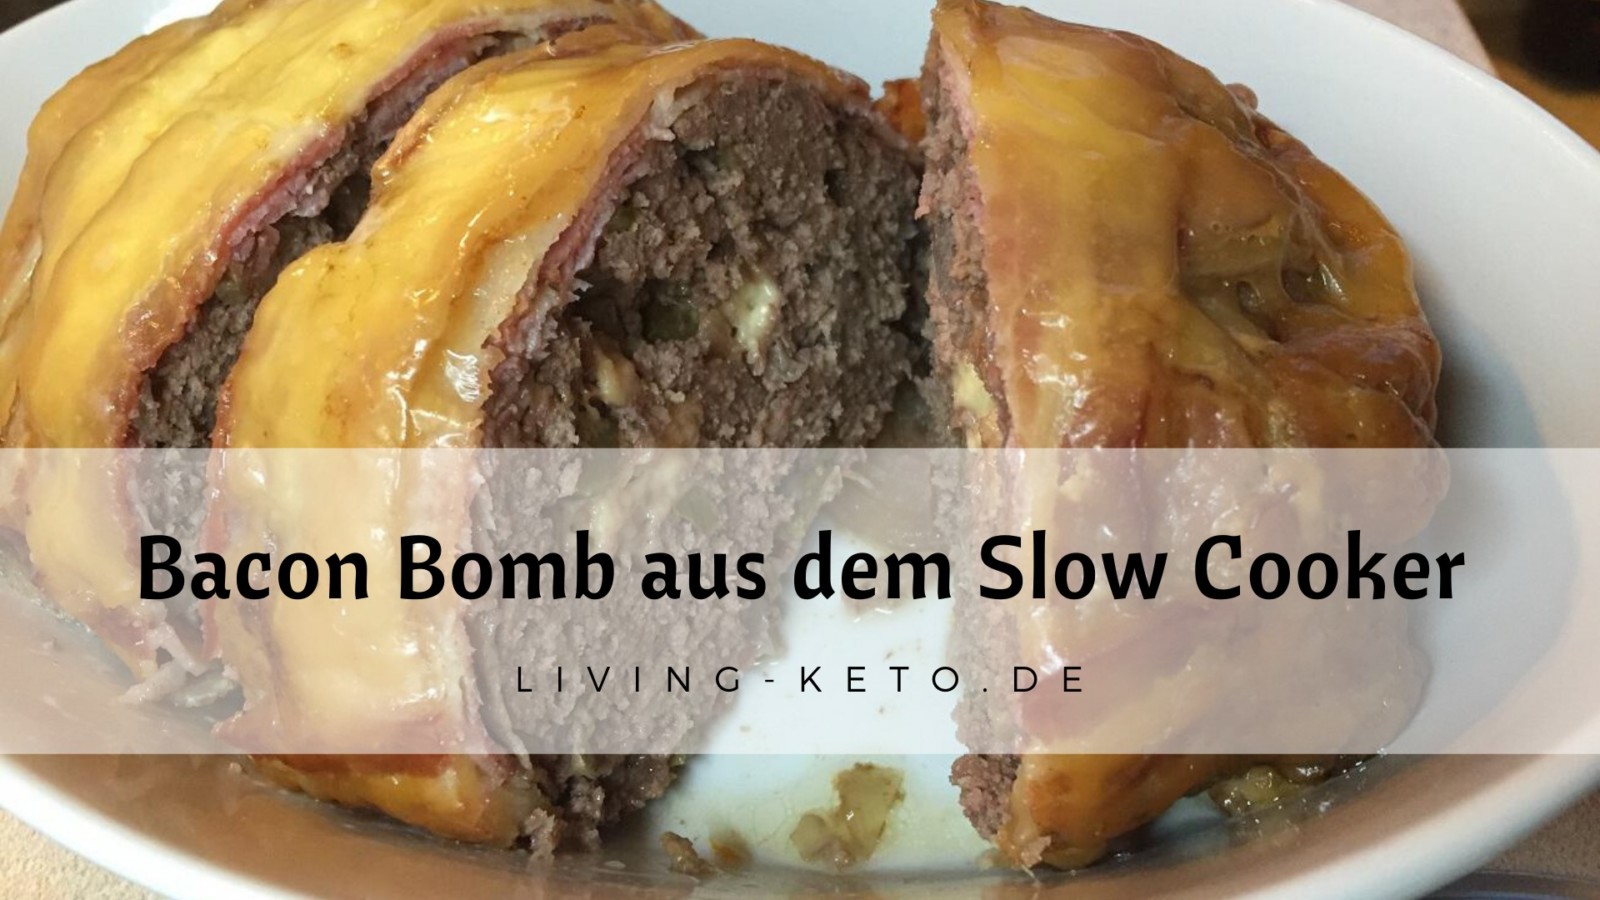 Bacon Bomb aus dem Slow Cooker | Ketogen Leben